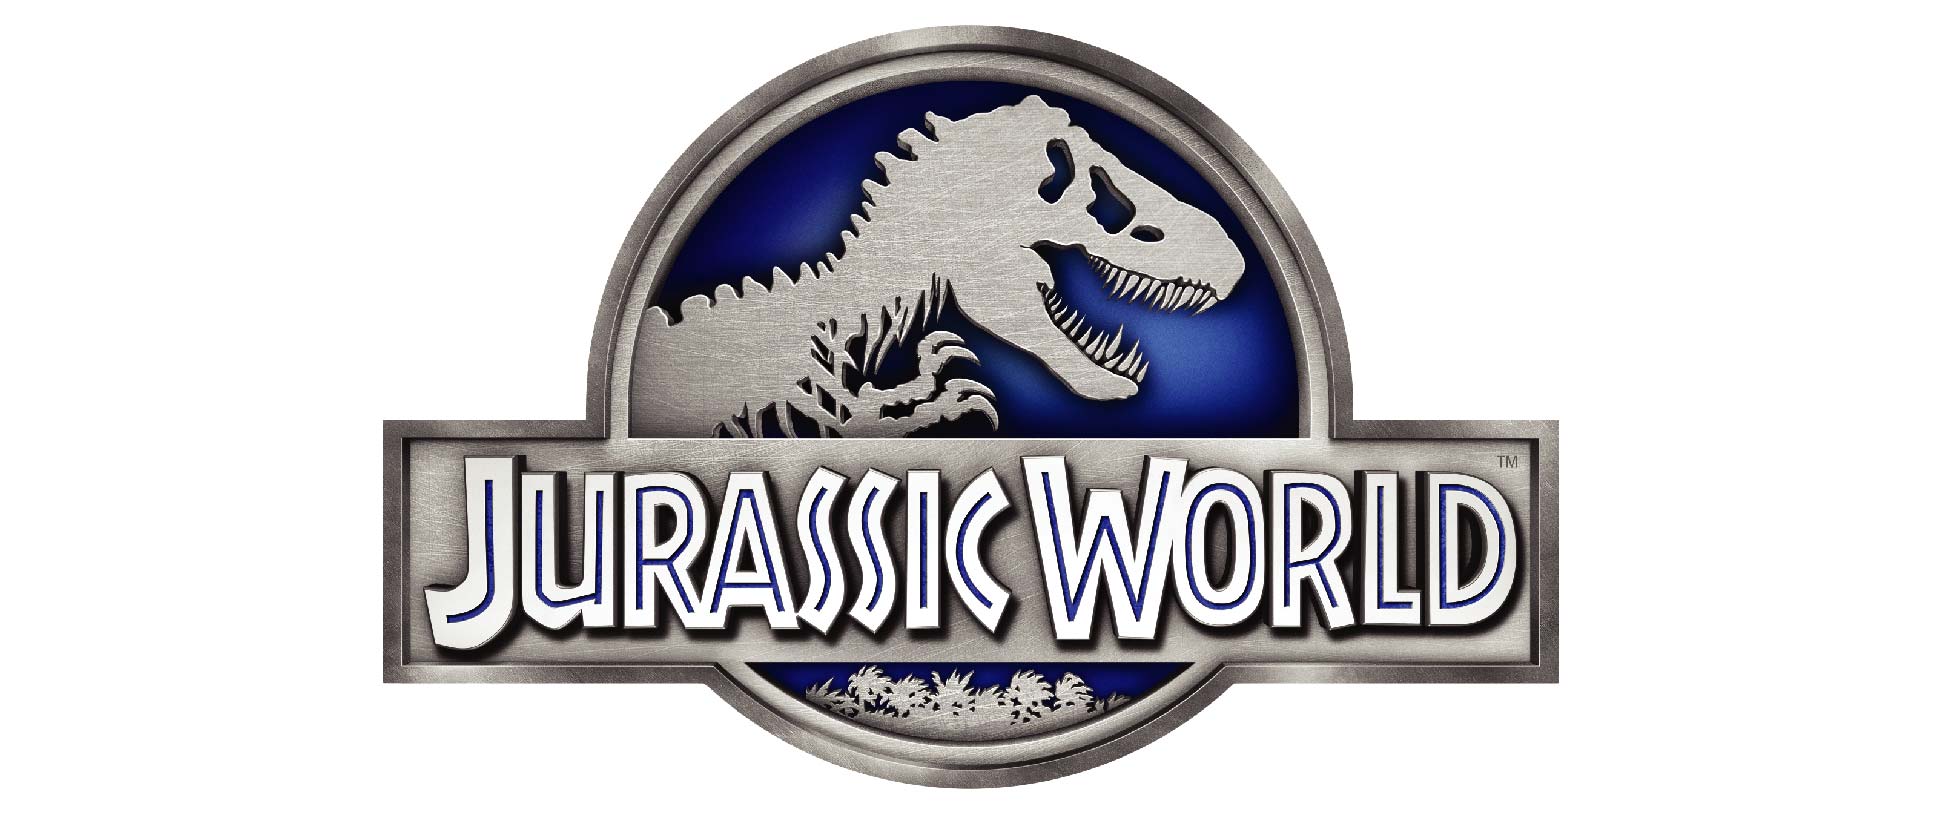 Jurassic Logo - Jurassic World's Sponsorship Campaign - SheerID Blog Post